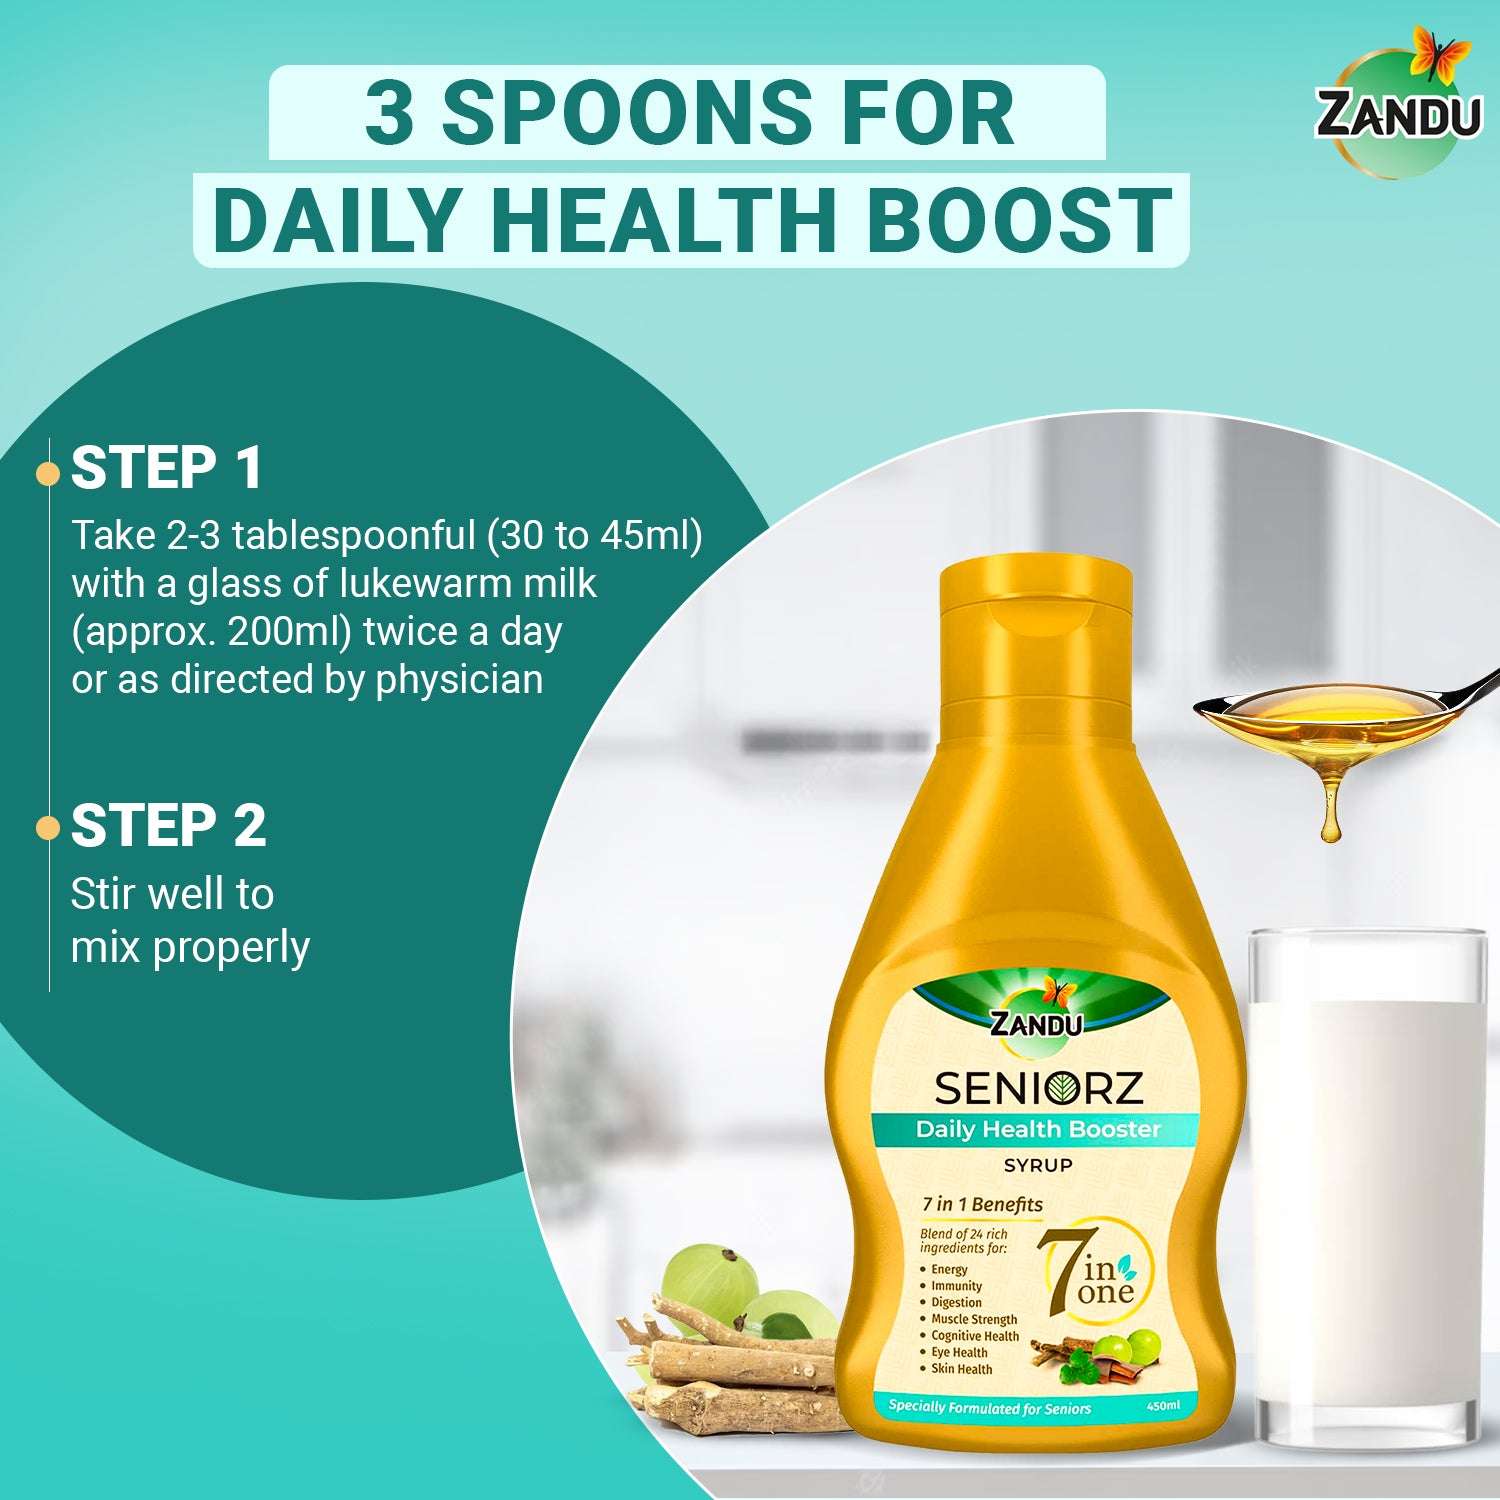 How to use Zandu Seniorz Daily Health Booster Syrup?